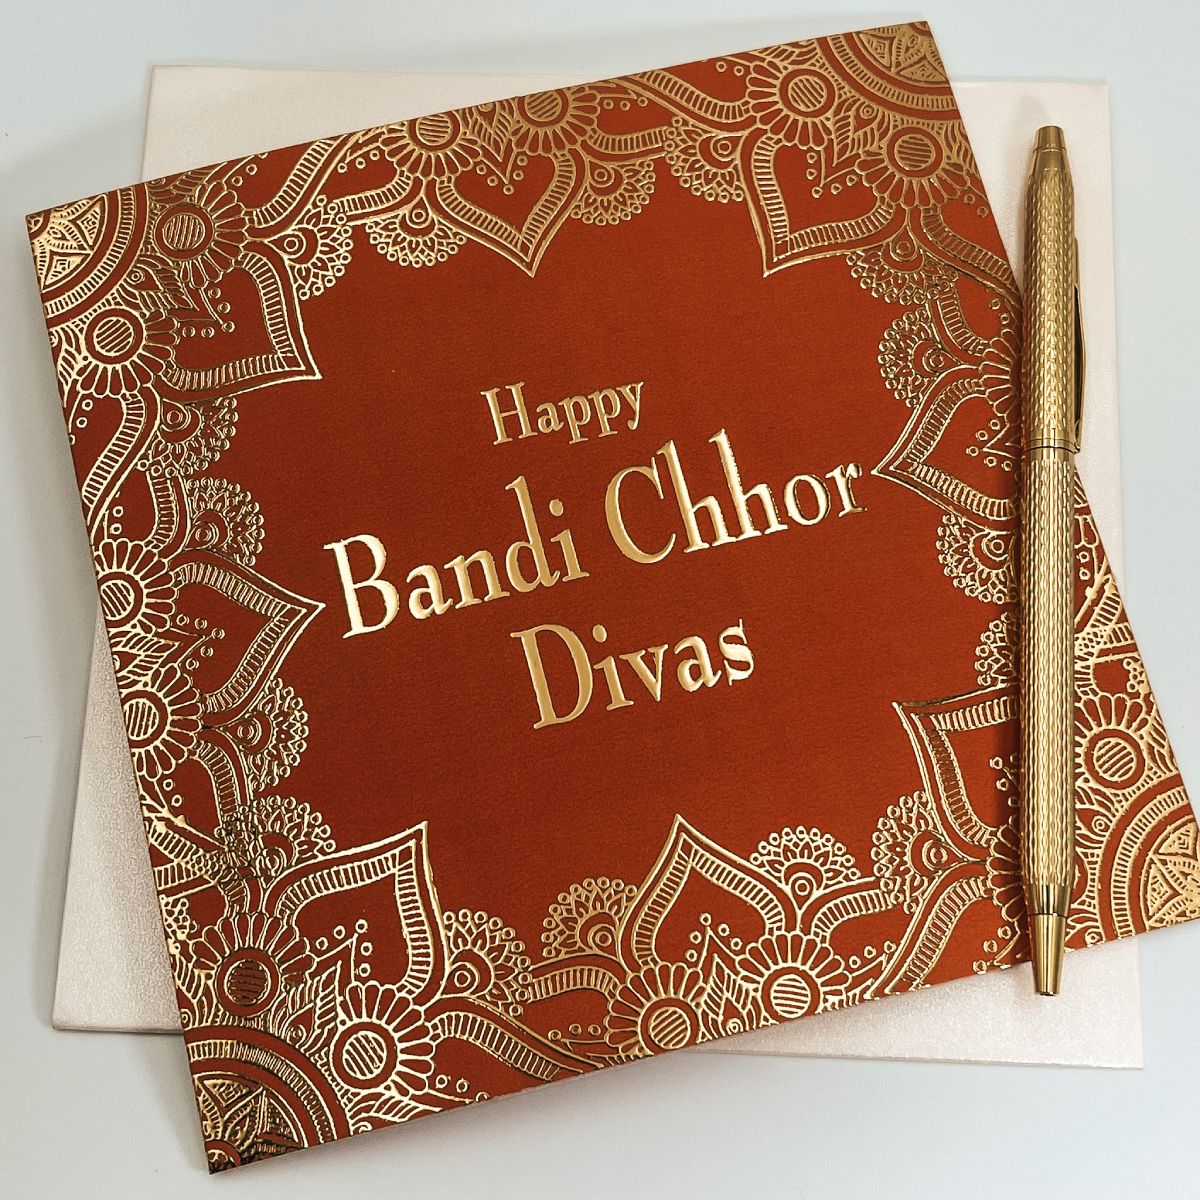 Happy Bandi Chhor Divas